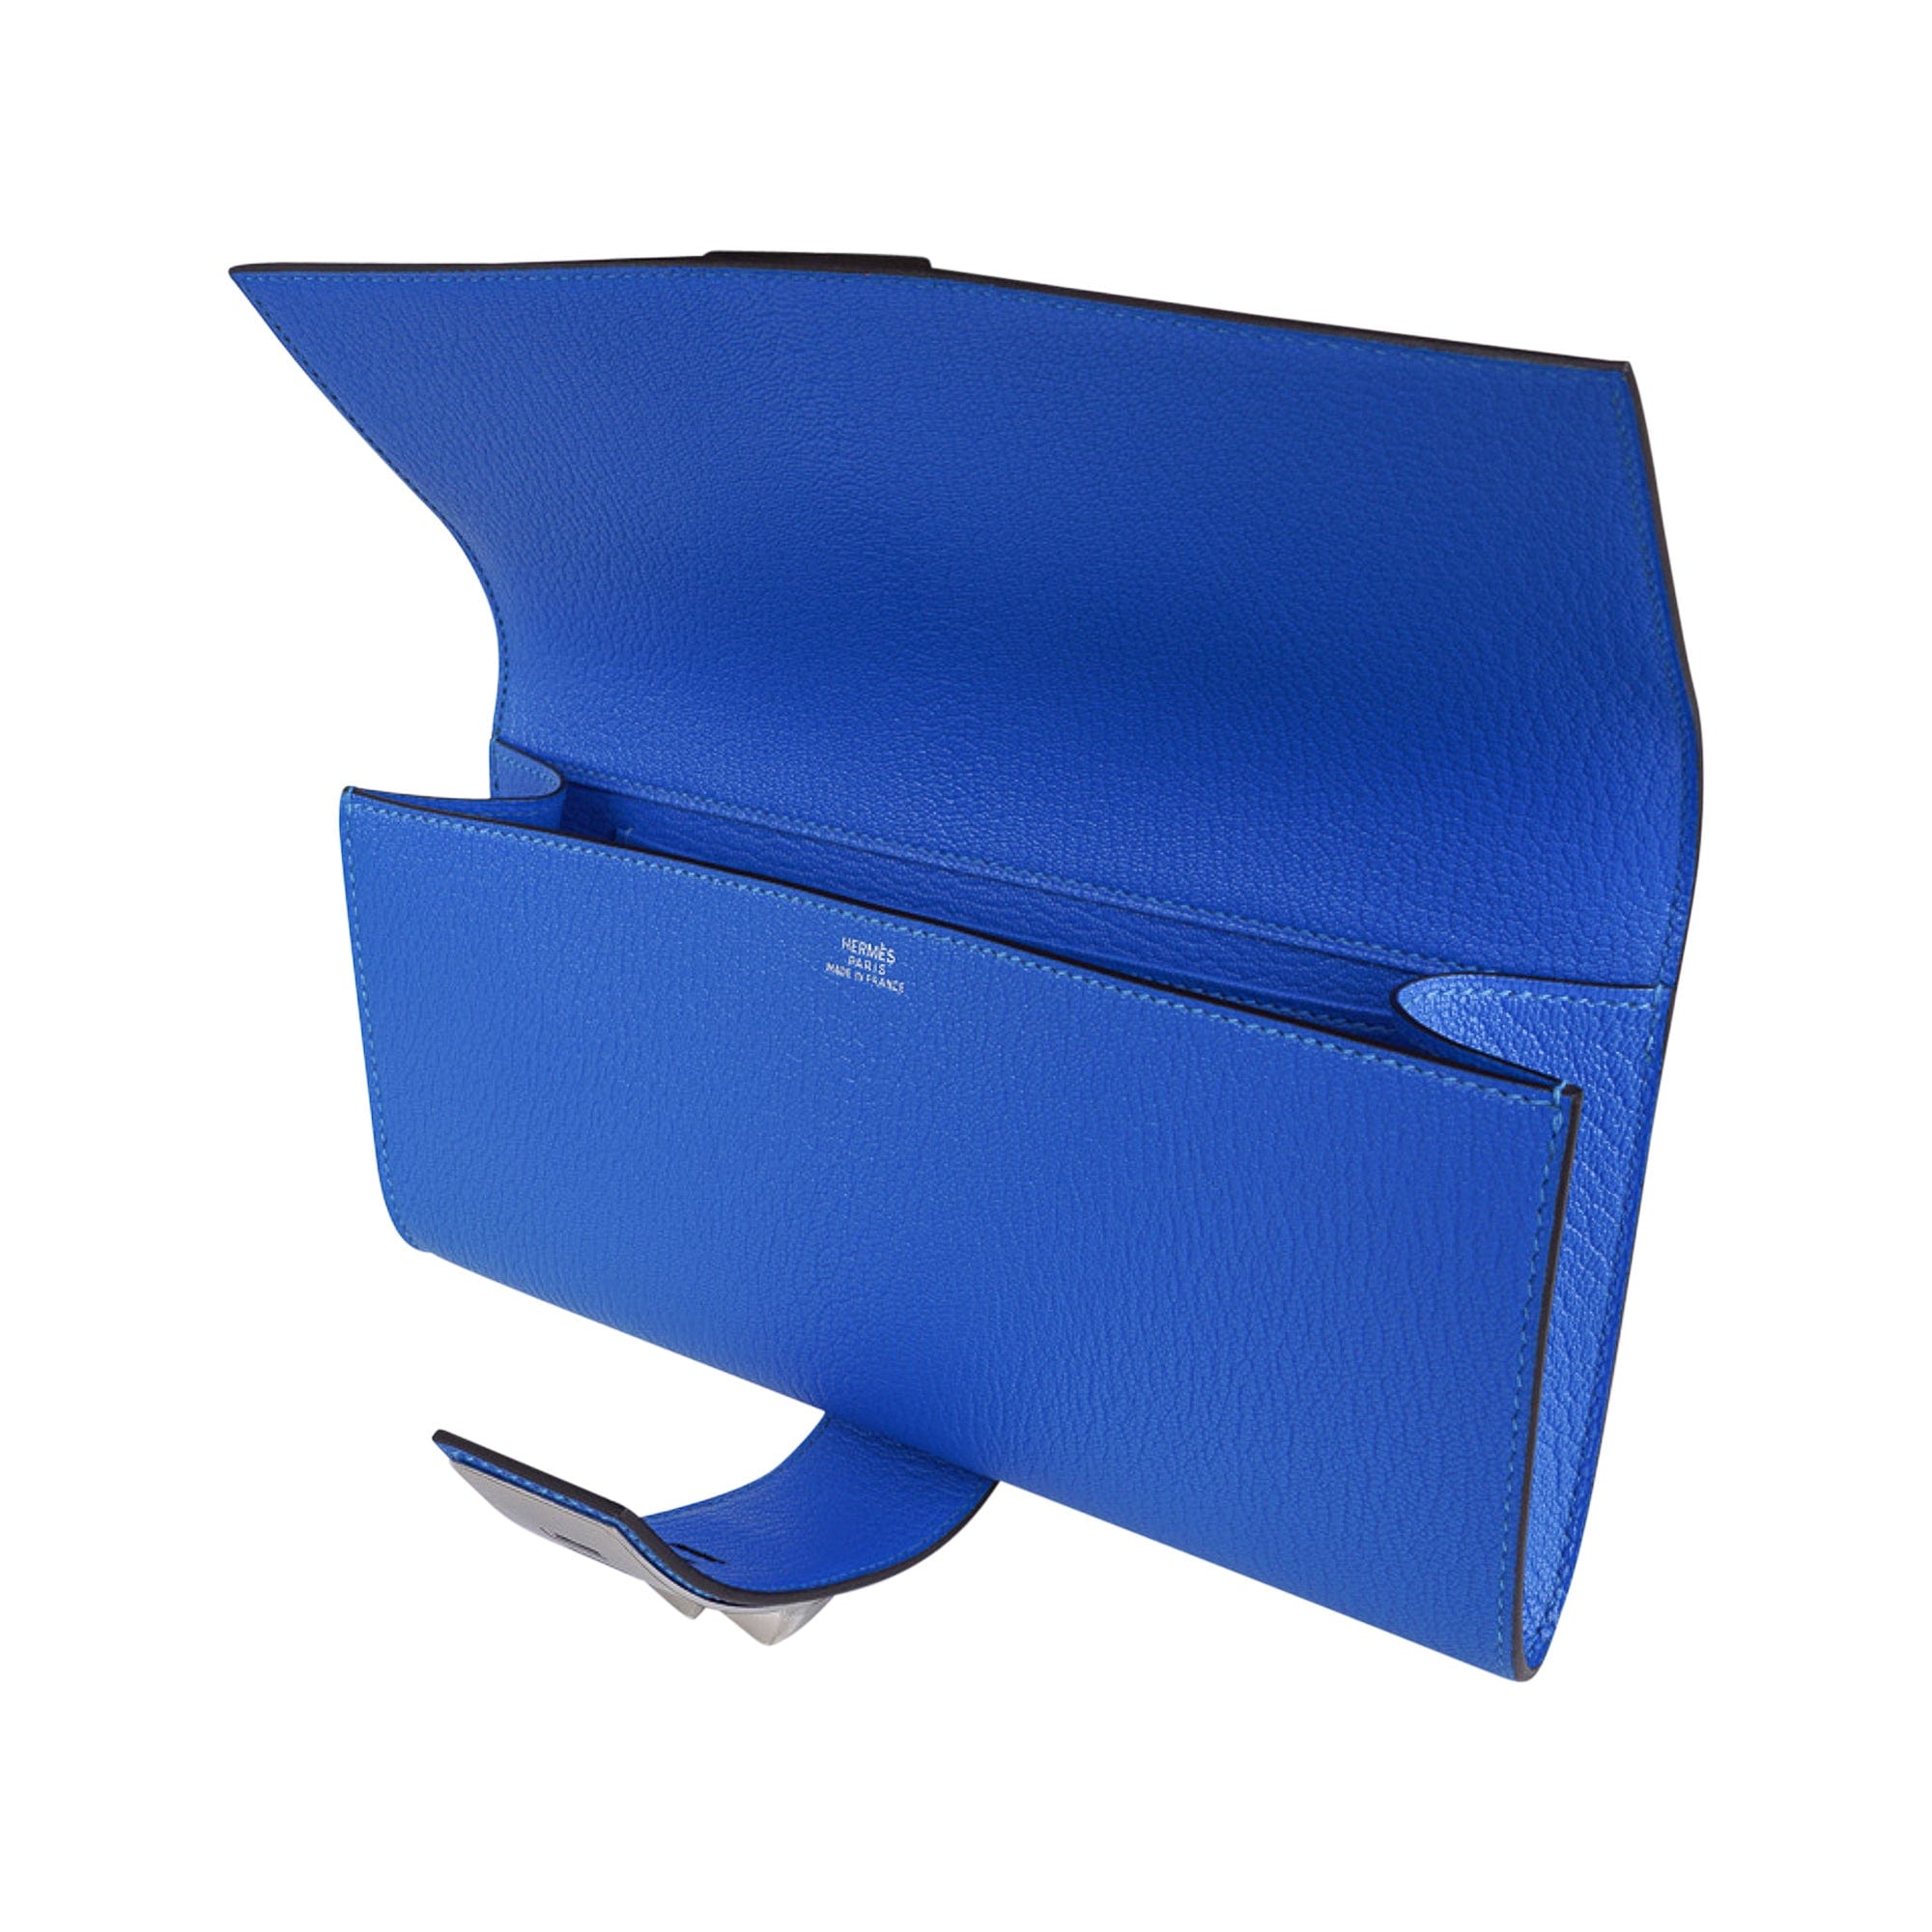 Hermes Medor Clutch Bag Blue Hydra Palladium Hardware New – Mightychic